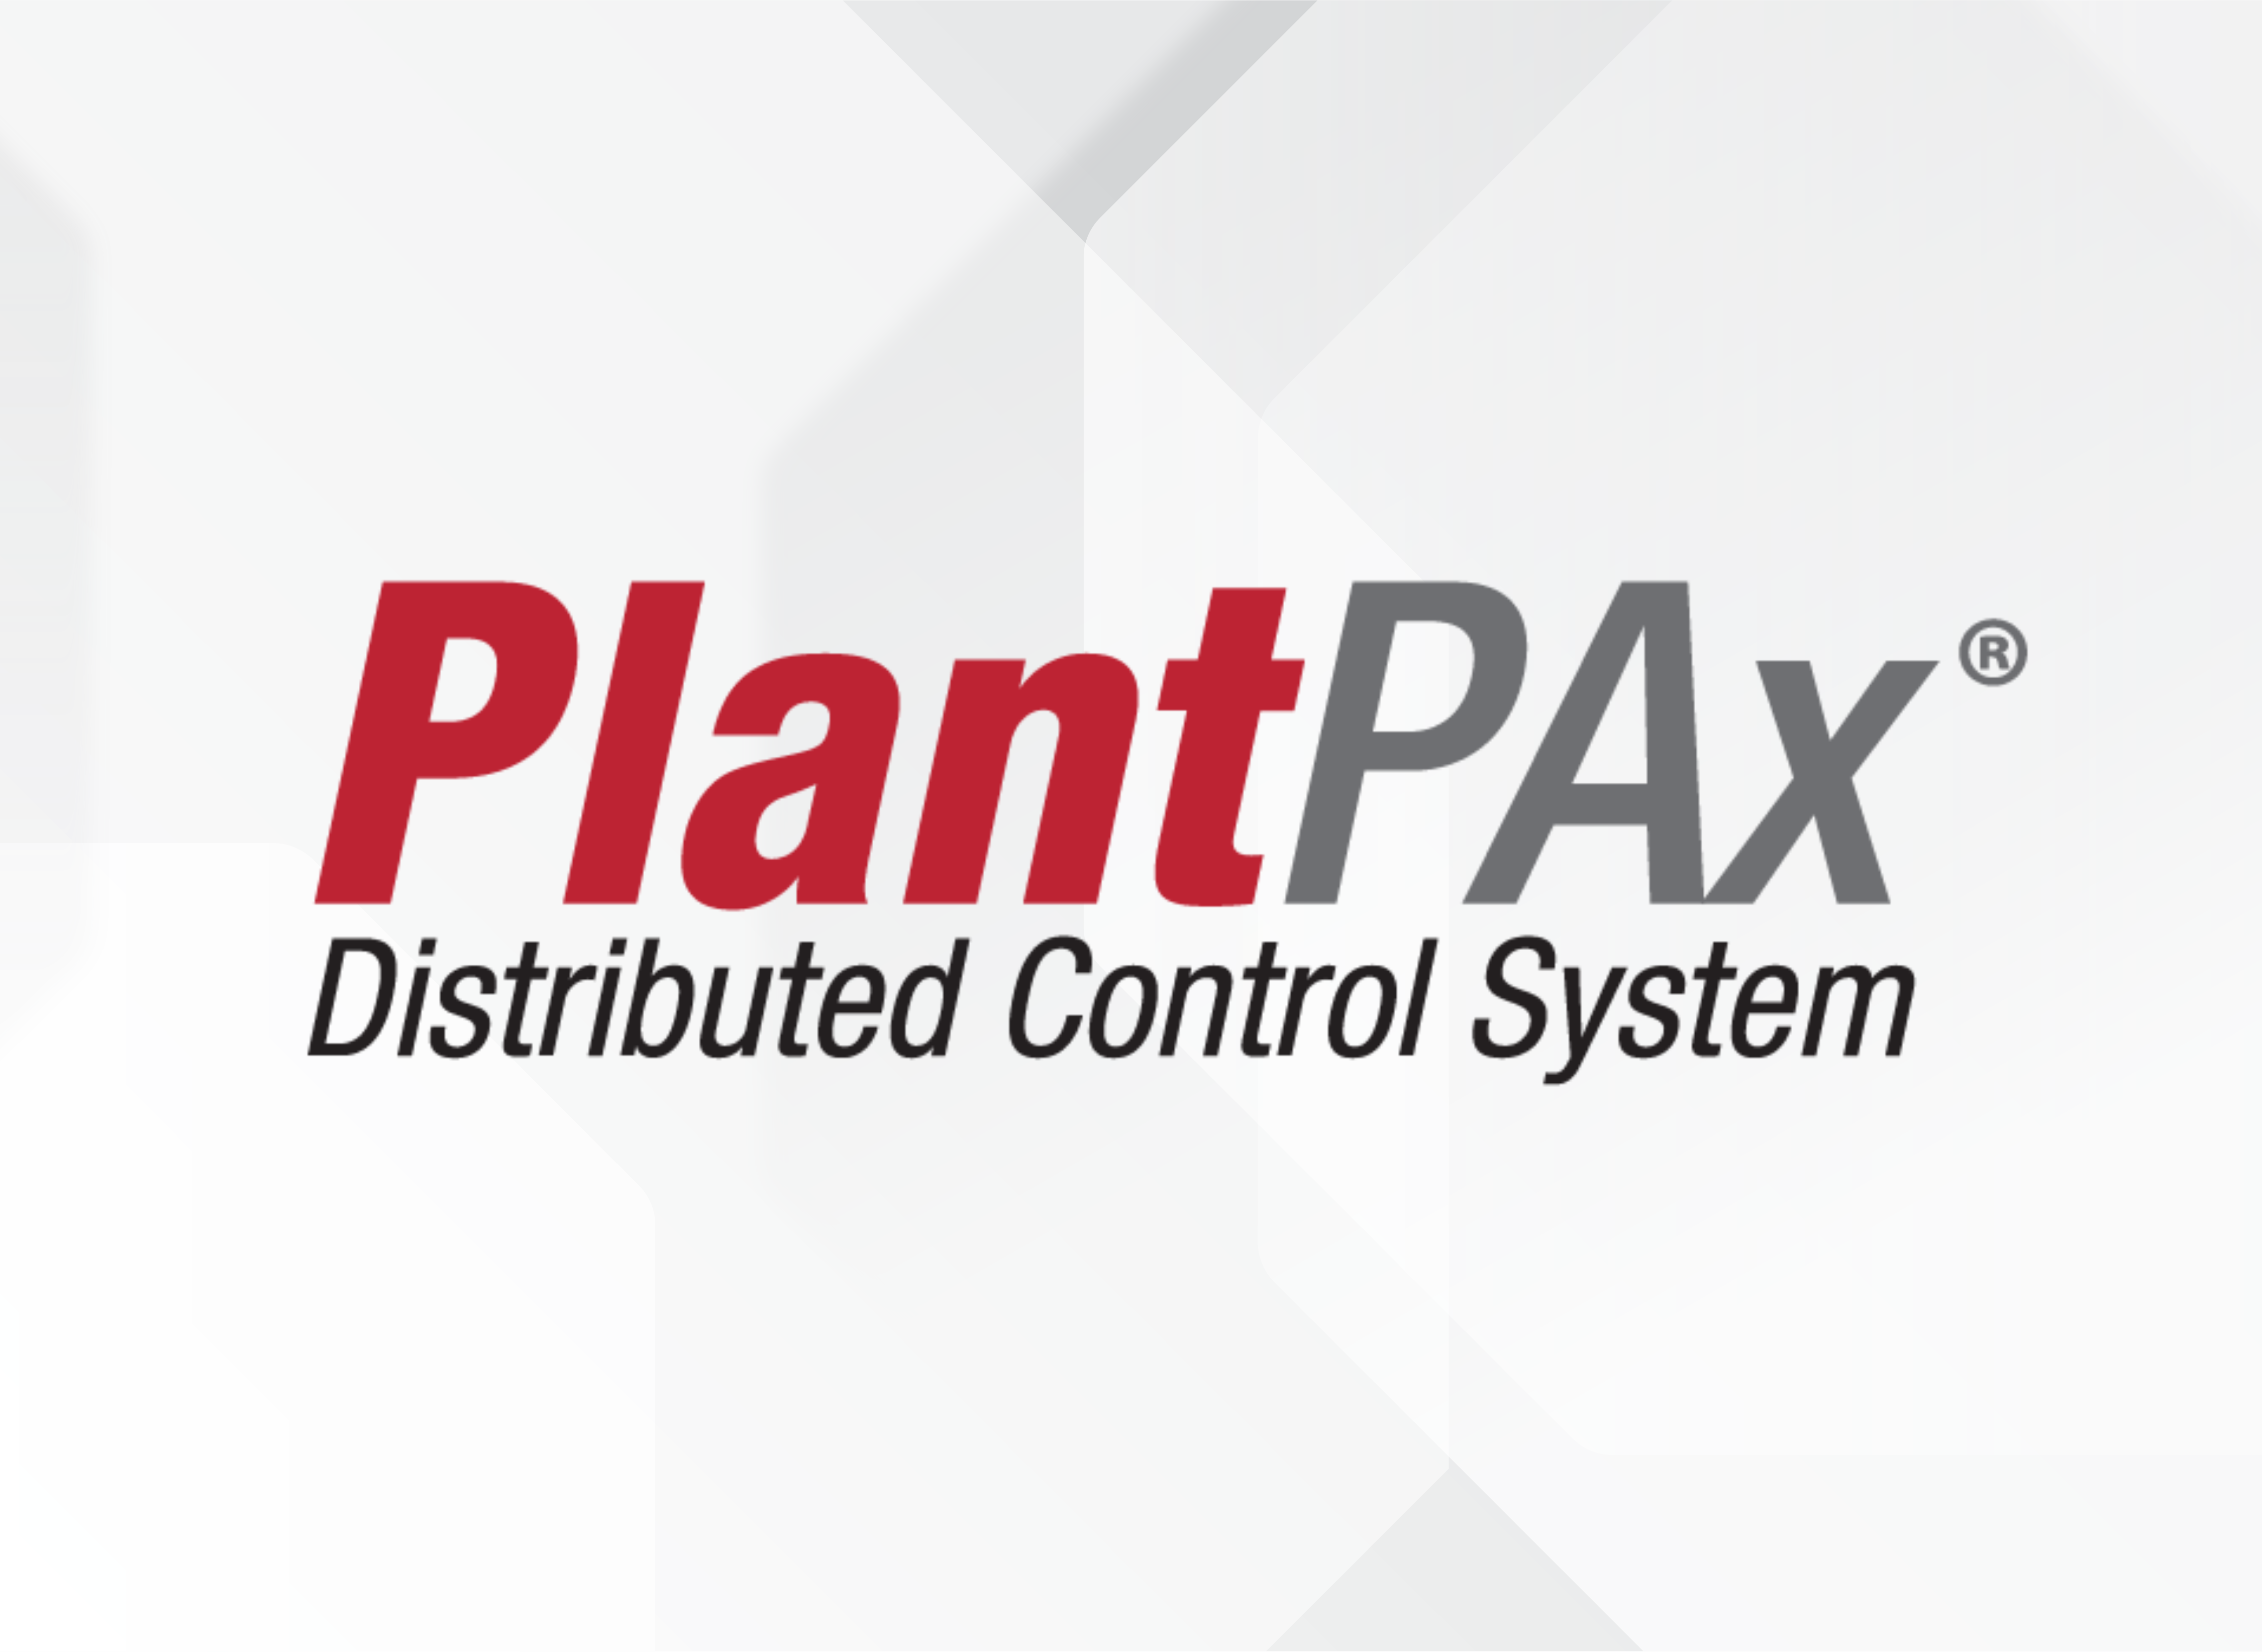 PlantPAx Perpetual + Maintenance